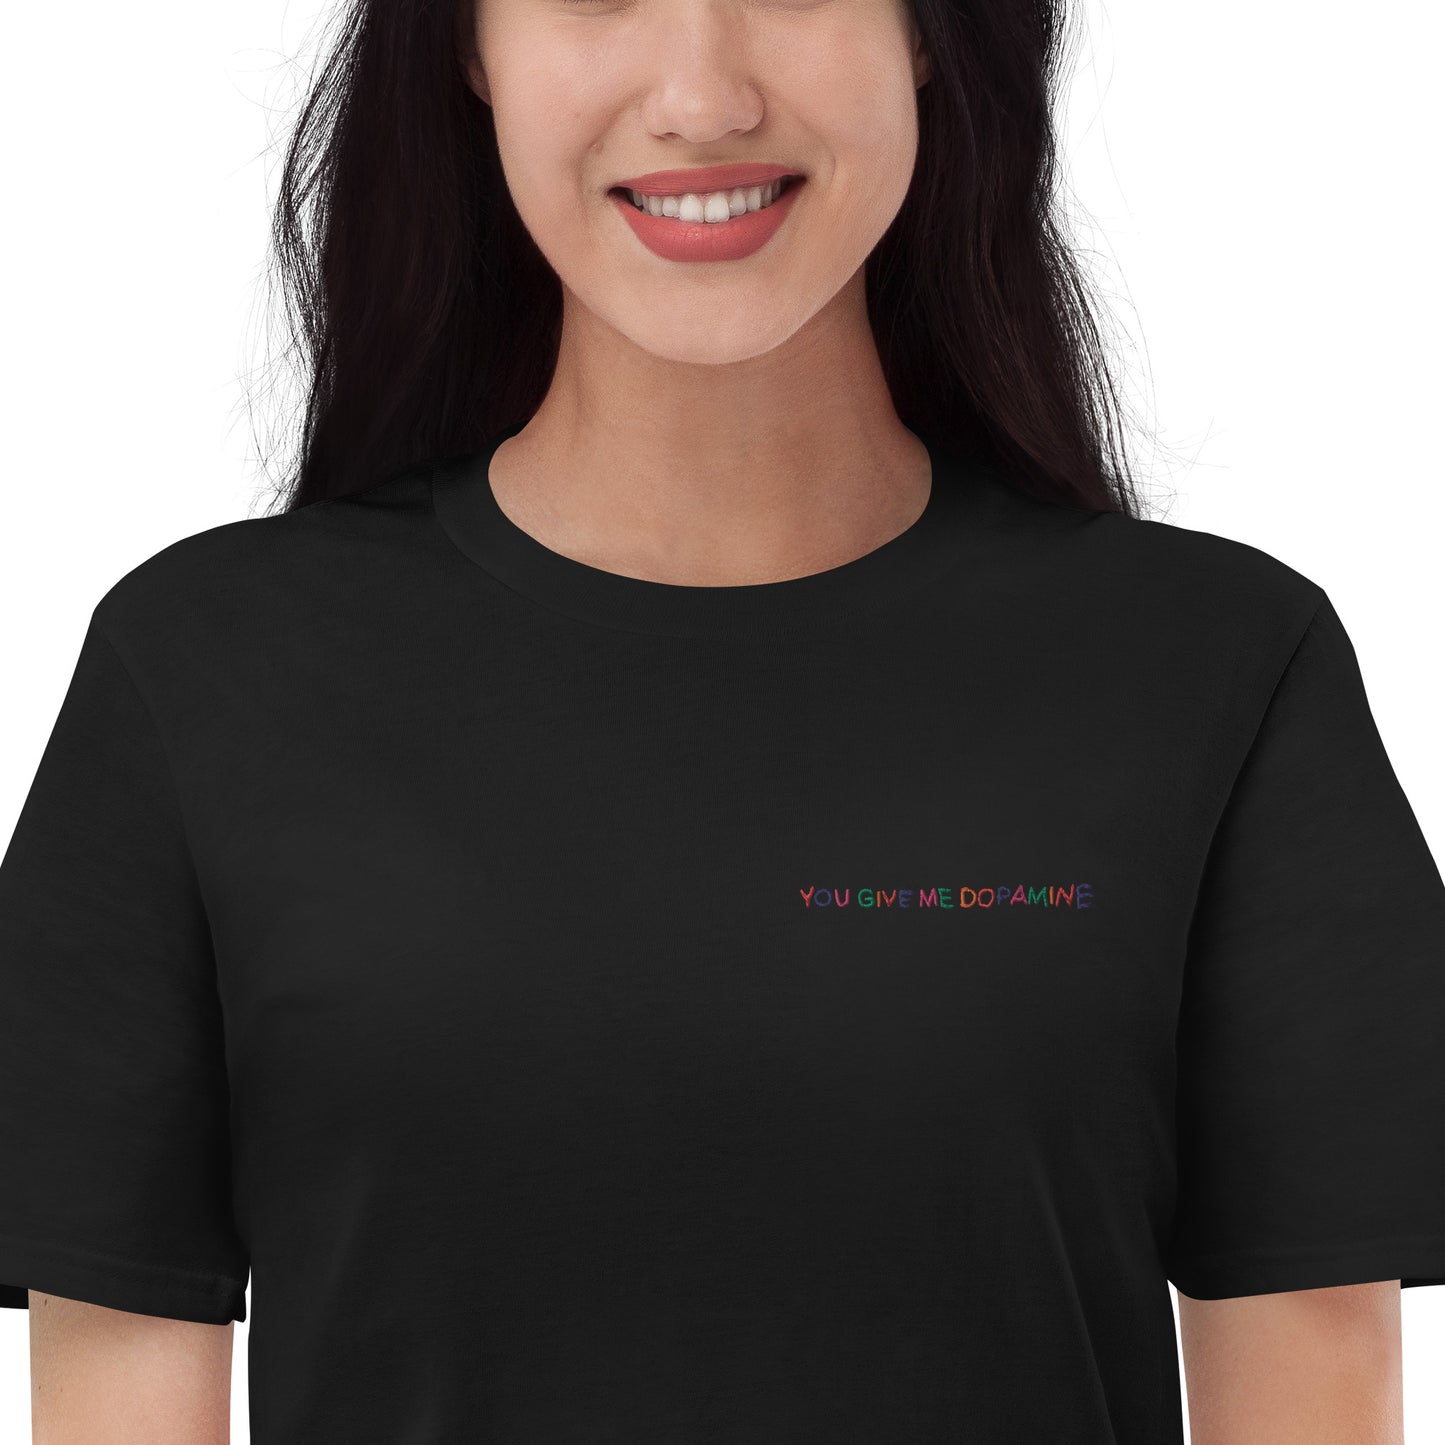 Dopamine Embroidered Unisex T-Shirt